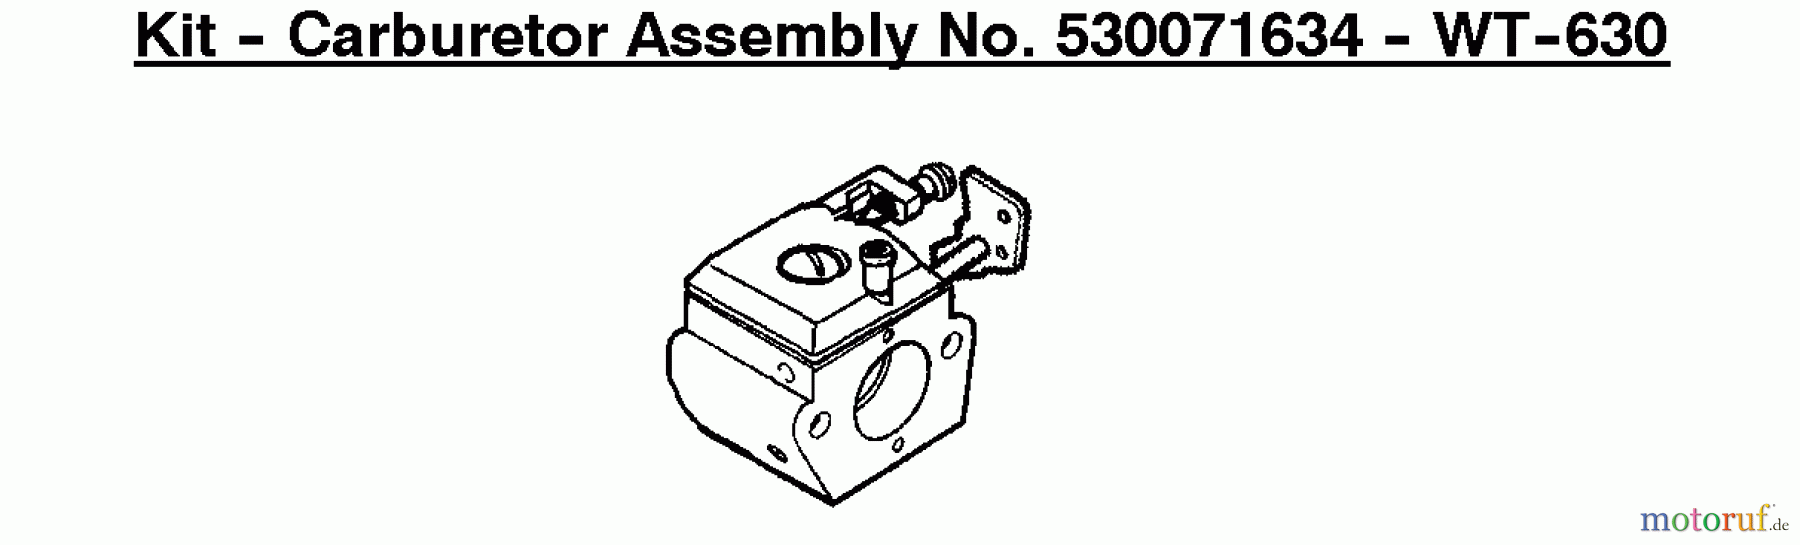  Poulan / Weed Eater Kantenschneider PE550 (Type 4) - Weed Eater Edger Kit - Carburetor Assembly